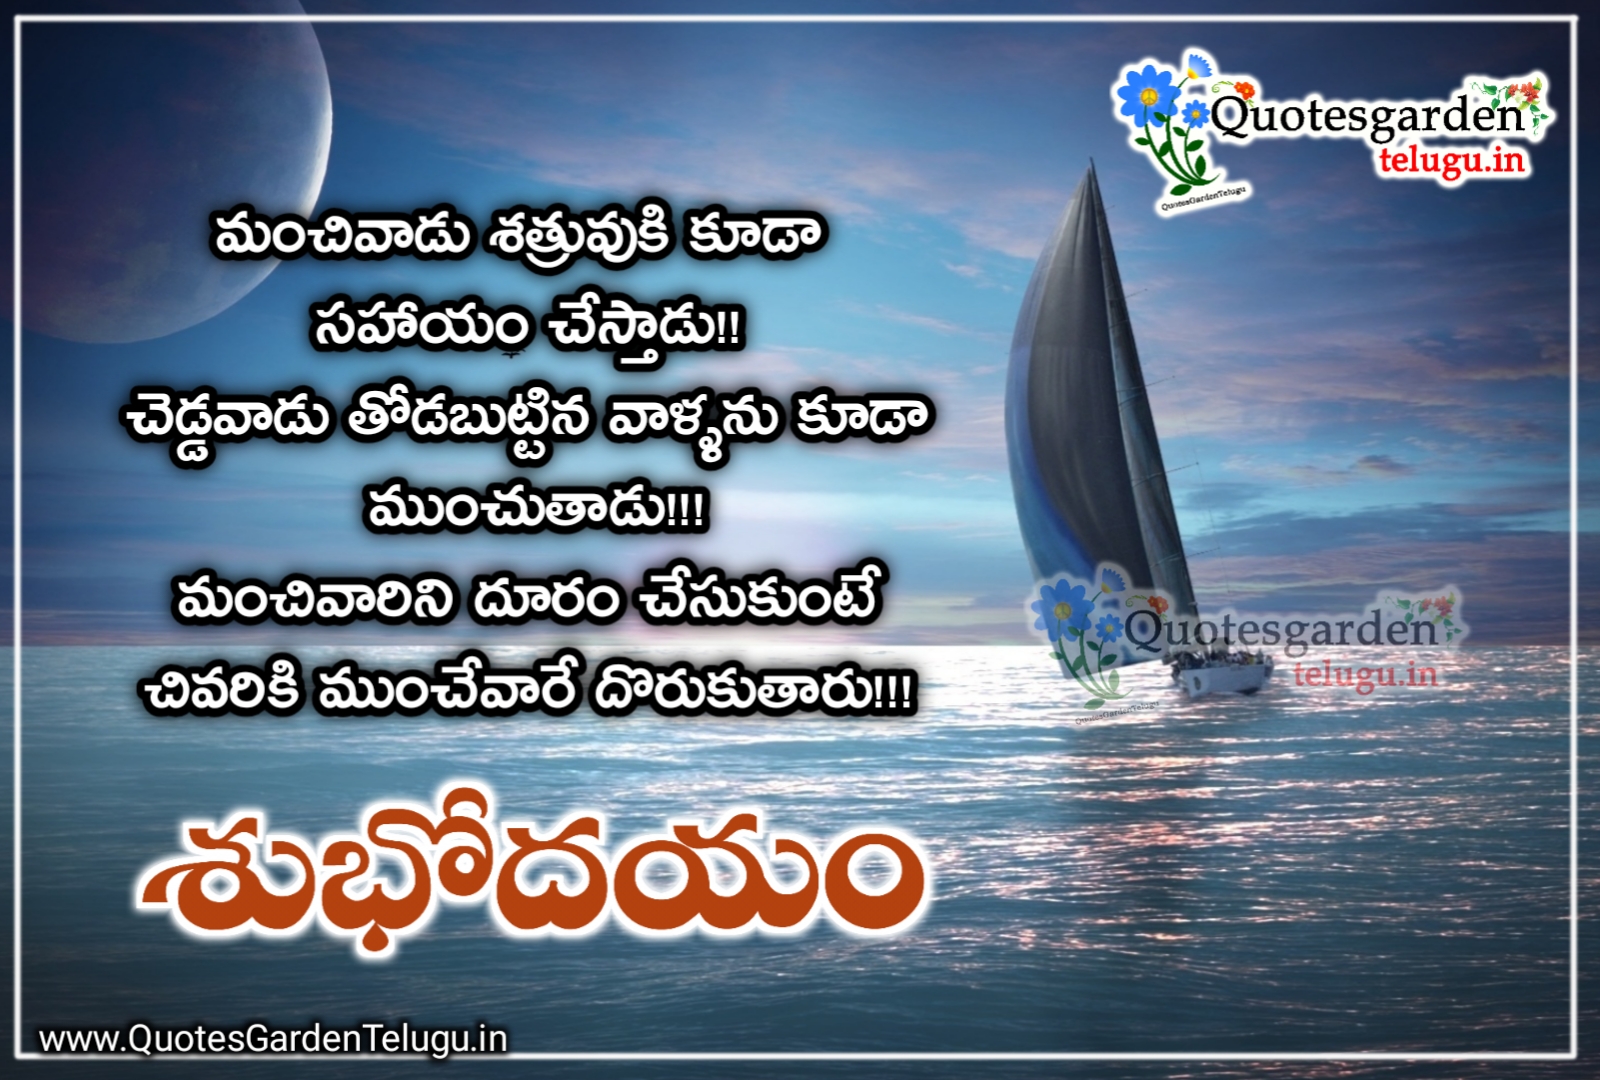 good morning real life quotes in Telugu | QUOTES GARDEN TELUGU ...